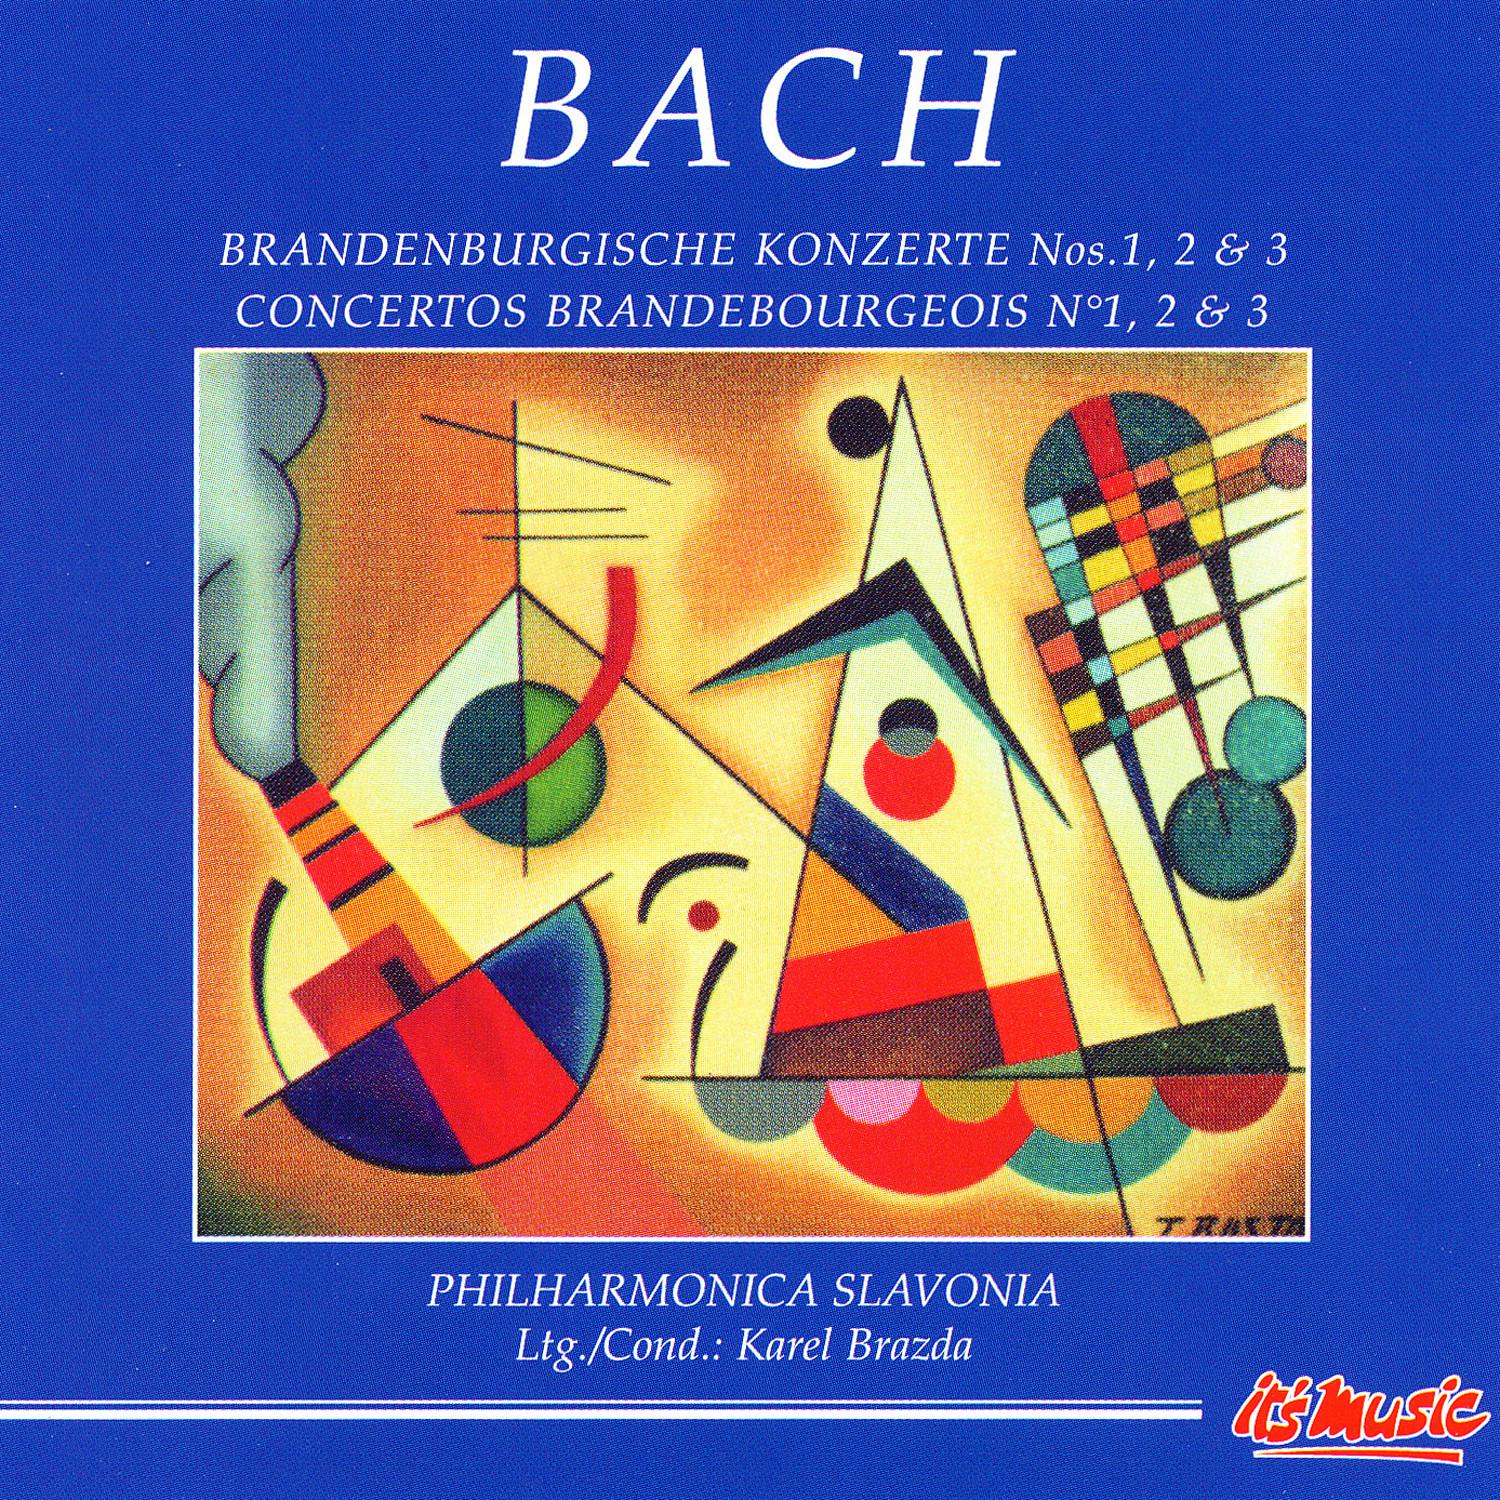 Brandenburg Concerto No. 3 in G major I. Allegro Moderato